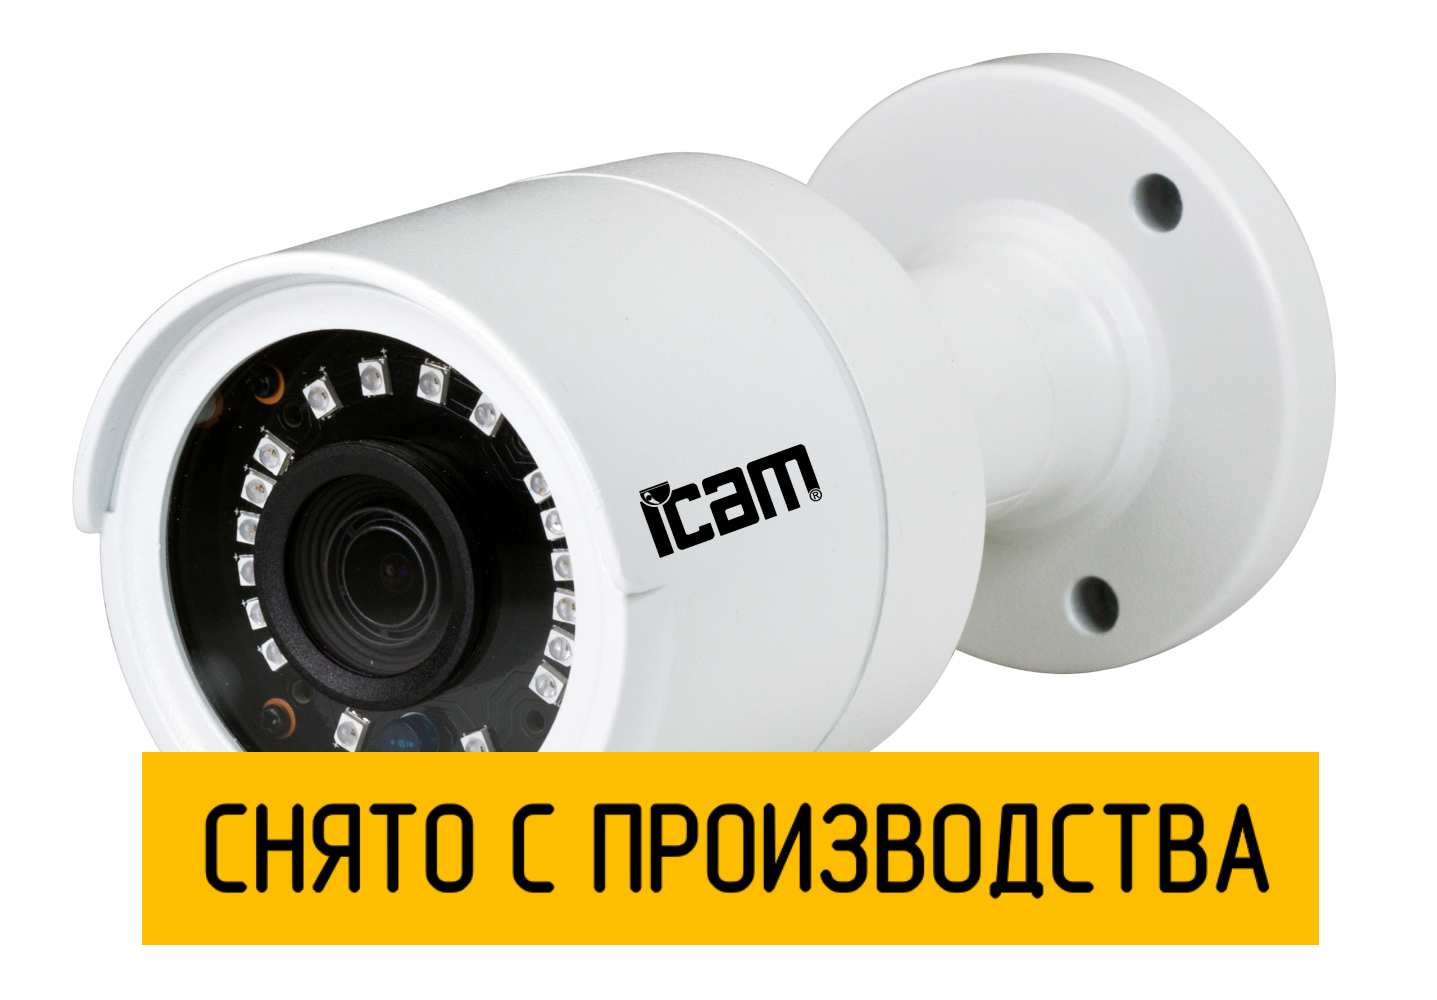 Цилиндрическая IP камера iCAM FXB3WA 2 Мп